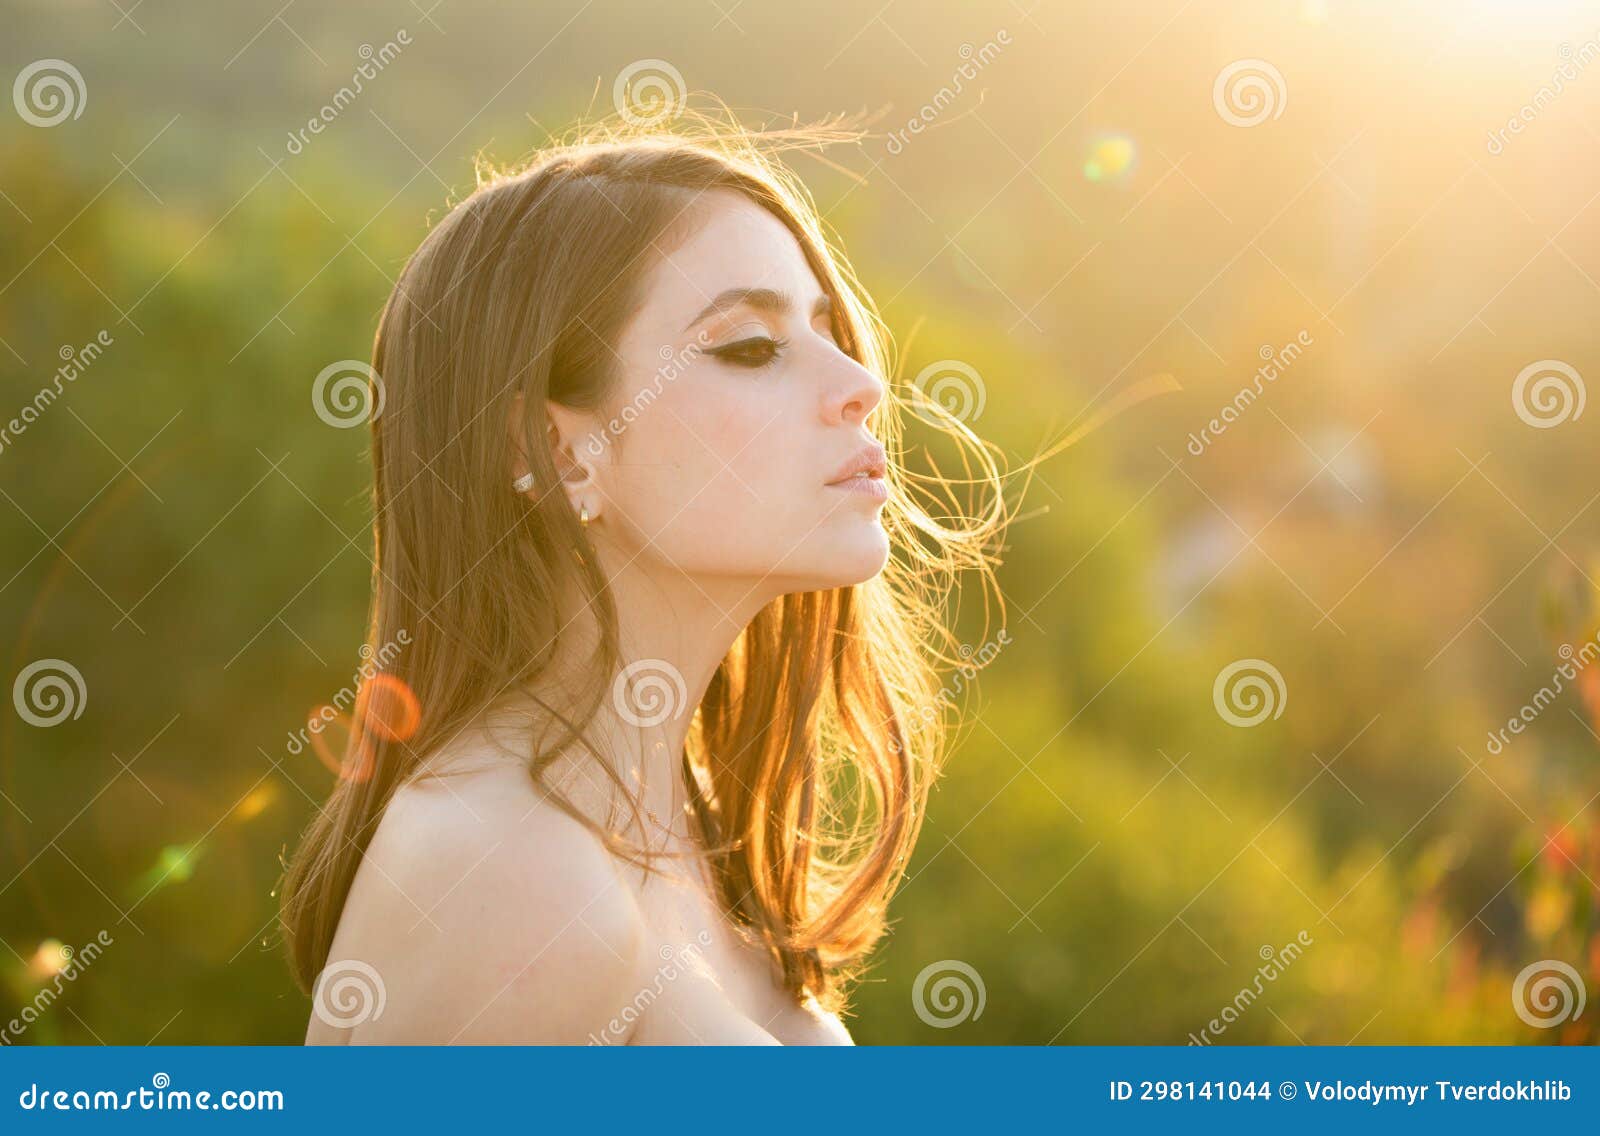 young woman outdoor enjoying the sunlight. spring romantic casual woman portrait. beautiful girl looking eways in summer